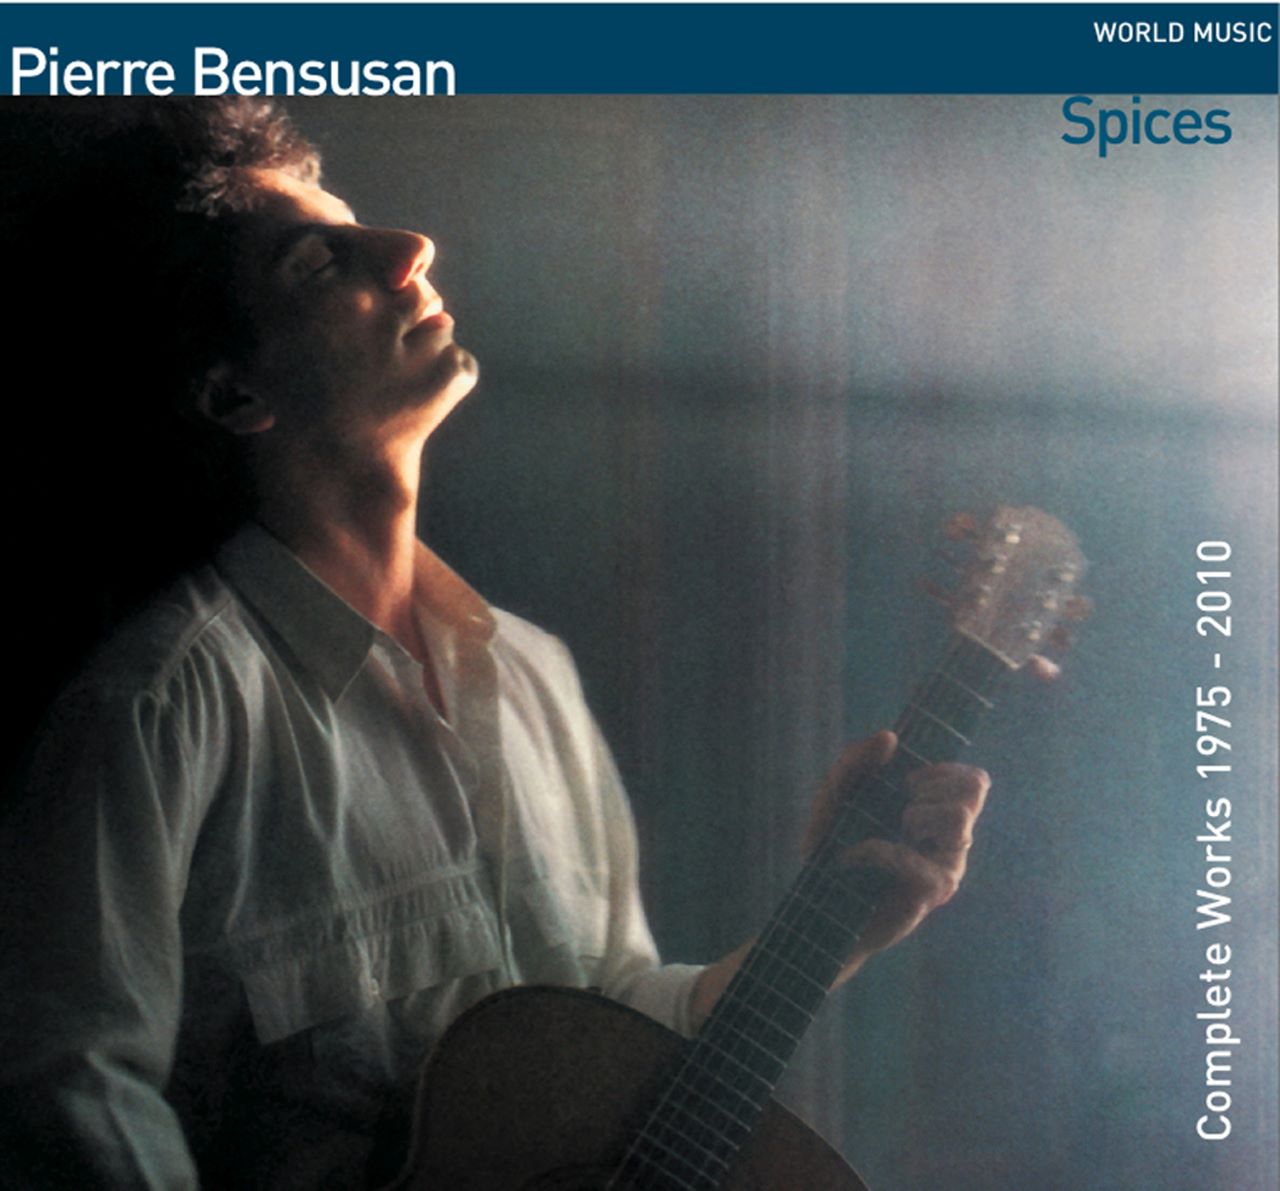 Pierre Bensusan – Spices cover album